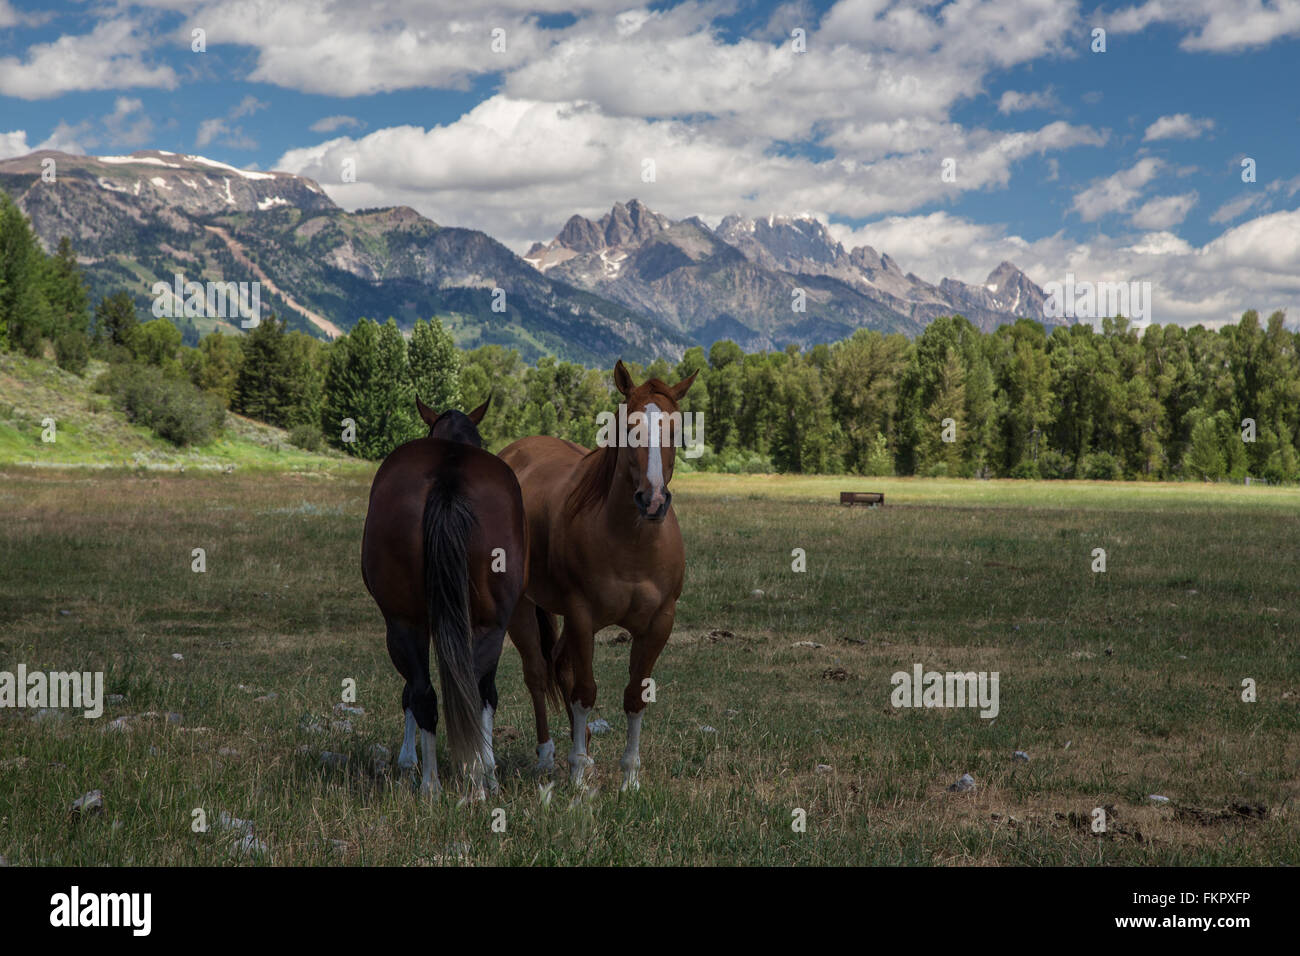 Wyoming-Pferde Stockfoto